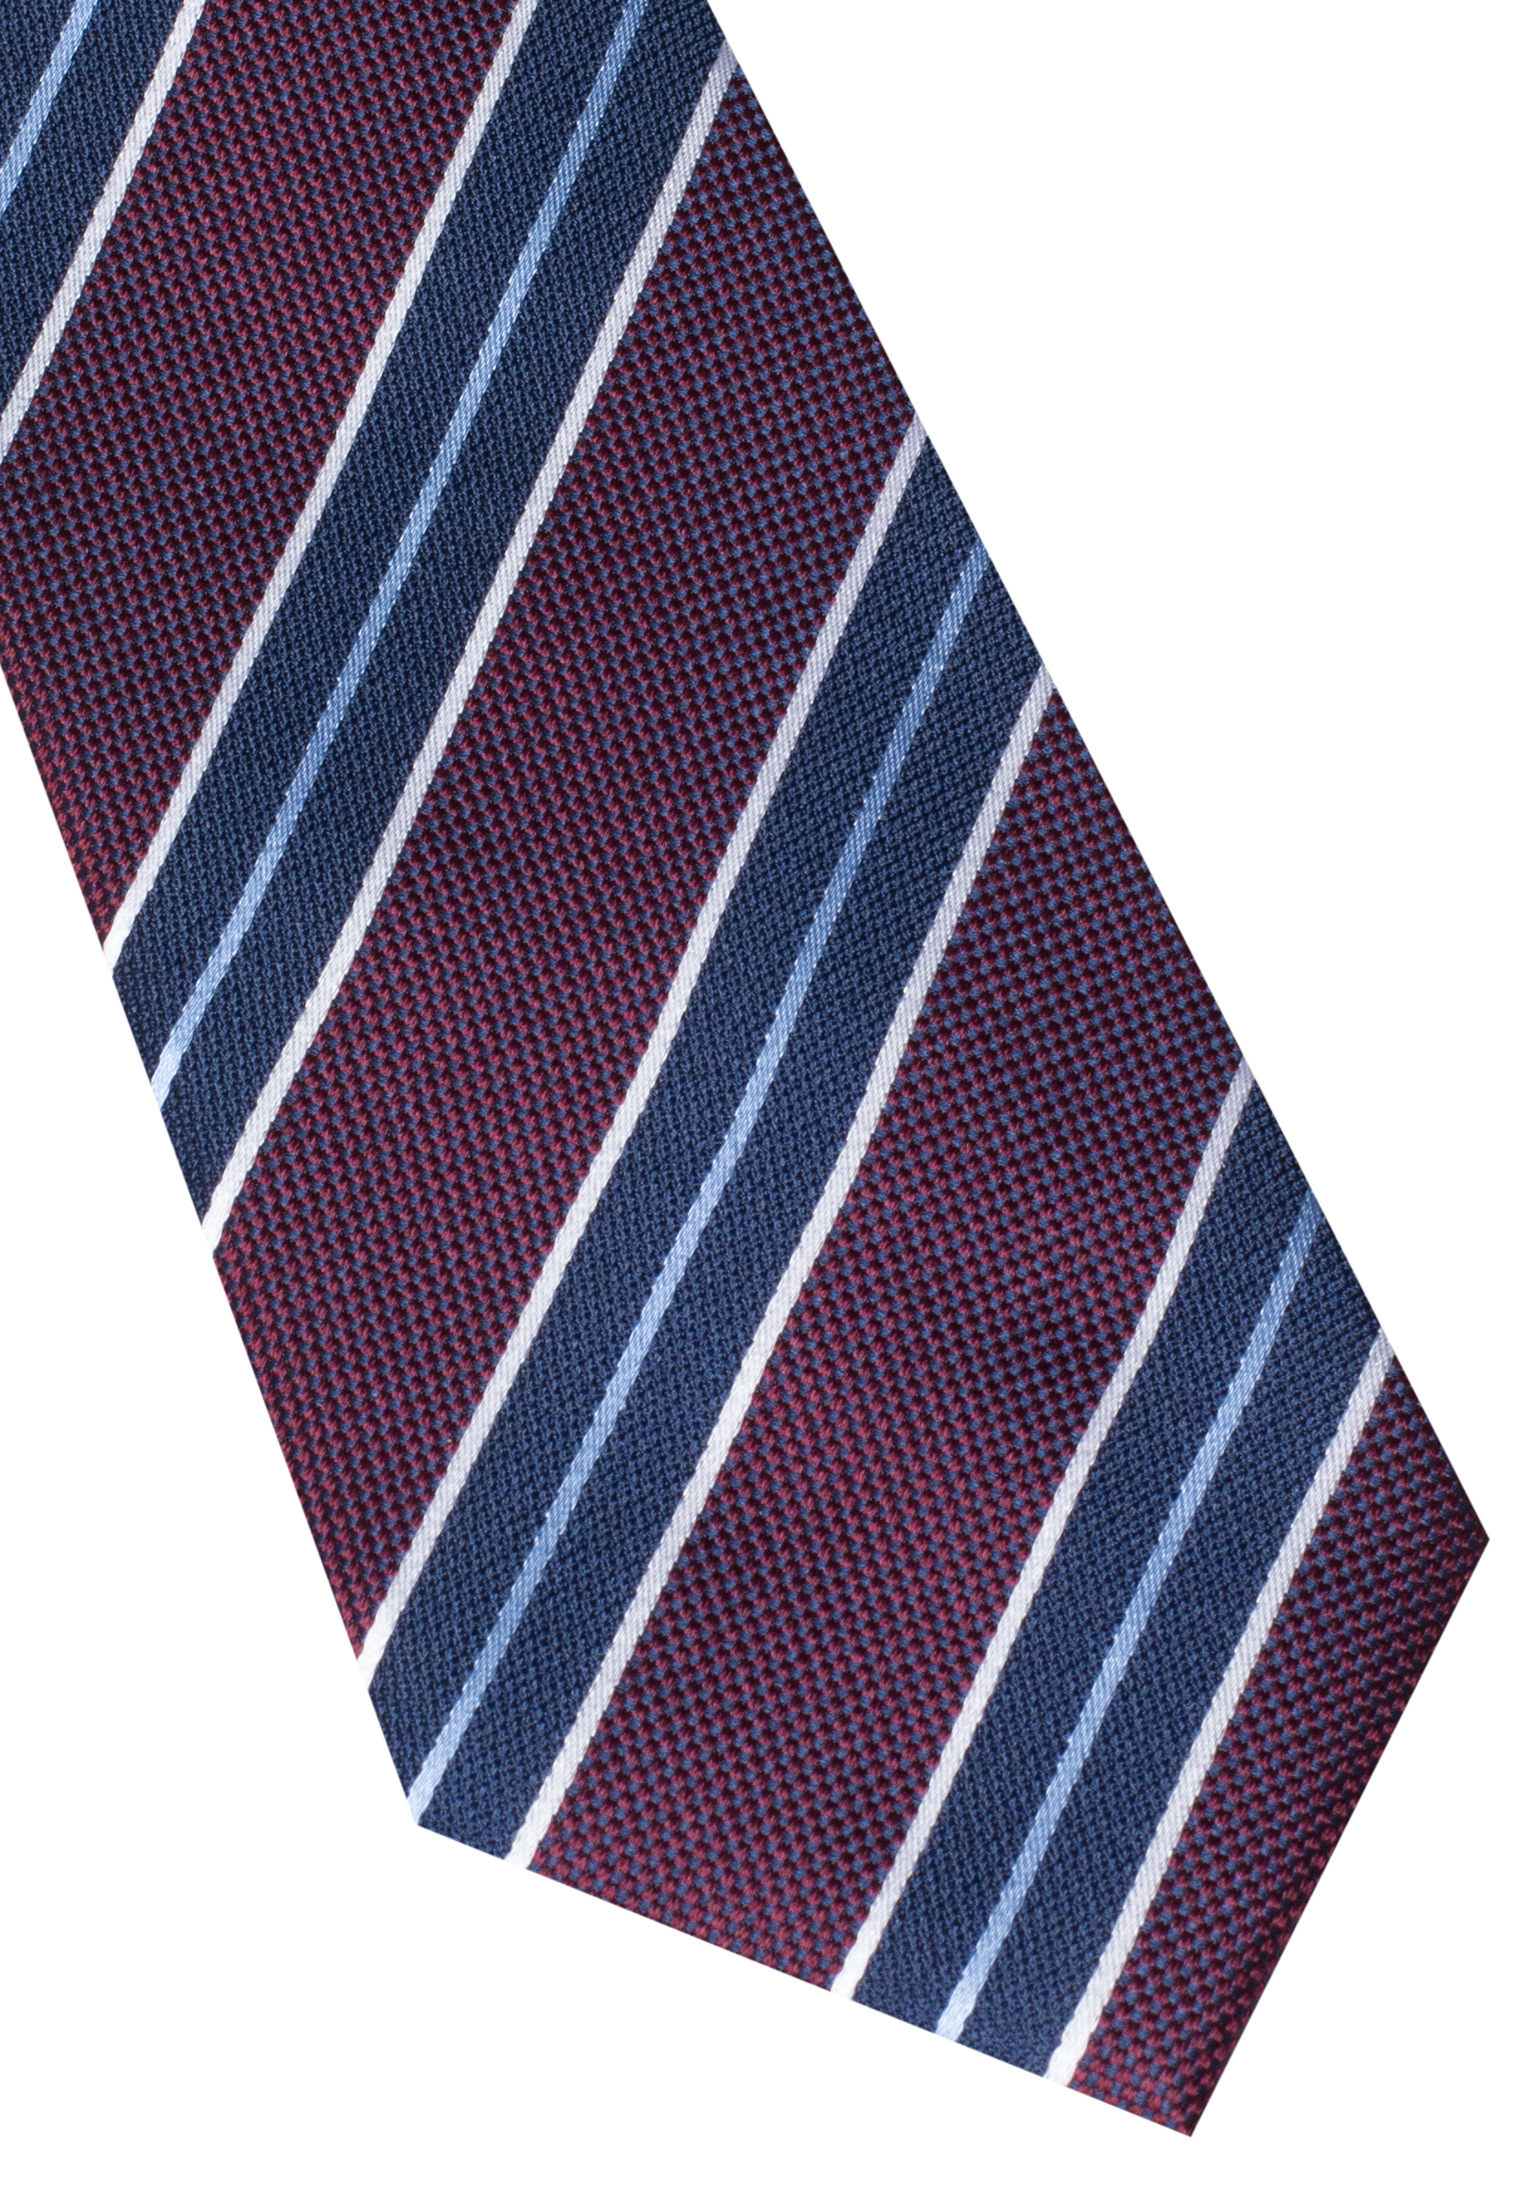 Krawatte in navy/rot gestreift | 142 | 1AC00533-81-89-142 navy/rot 